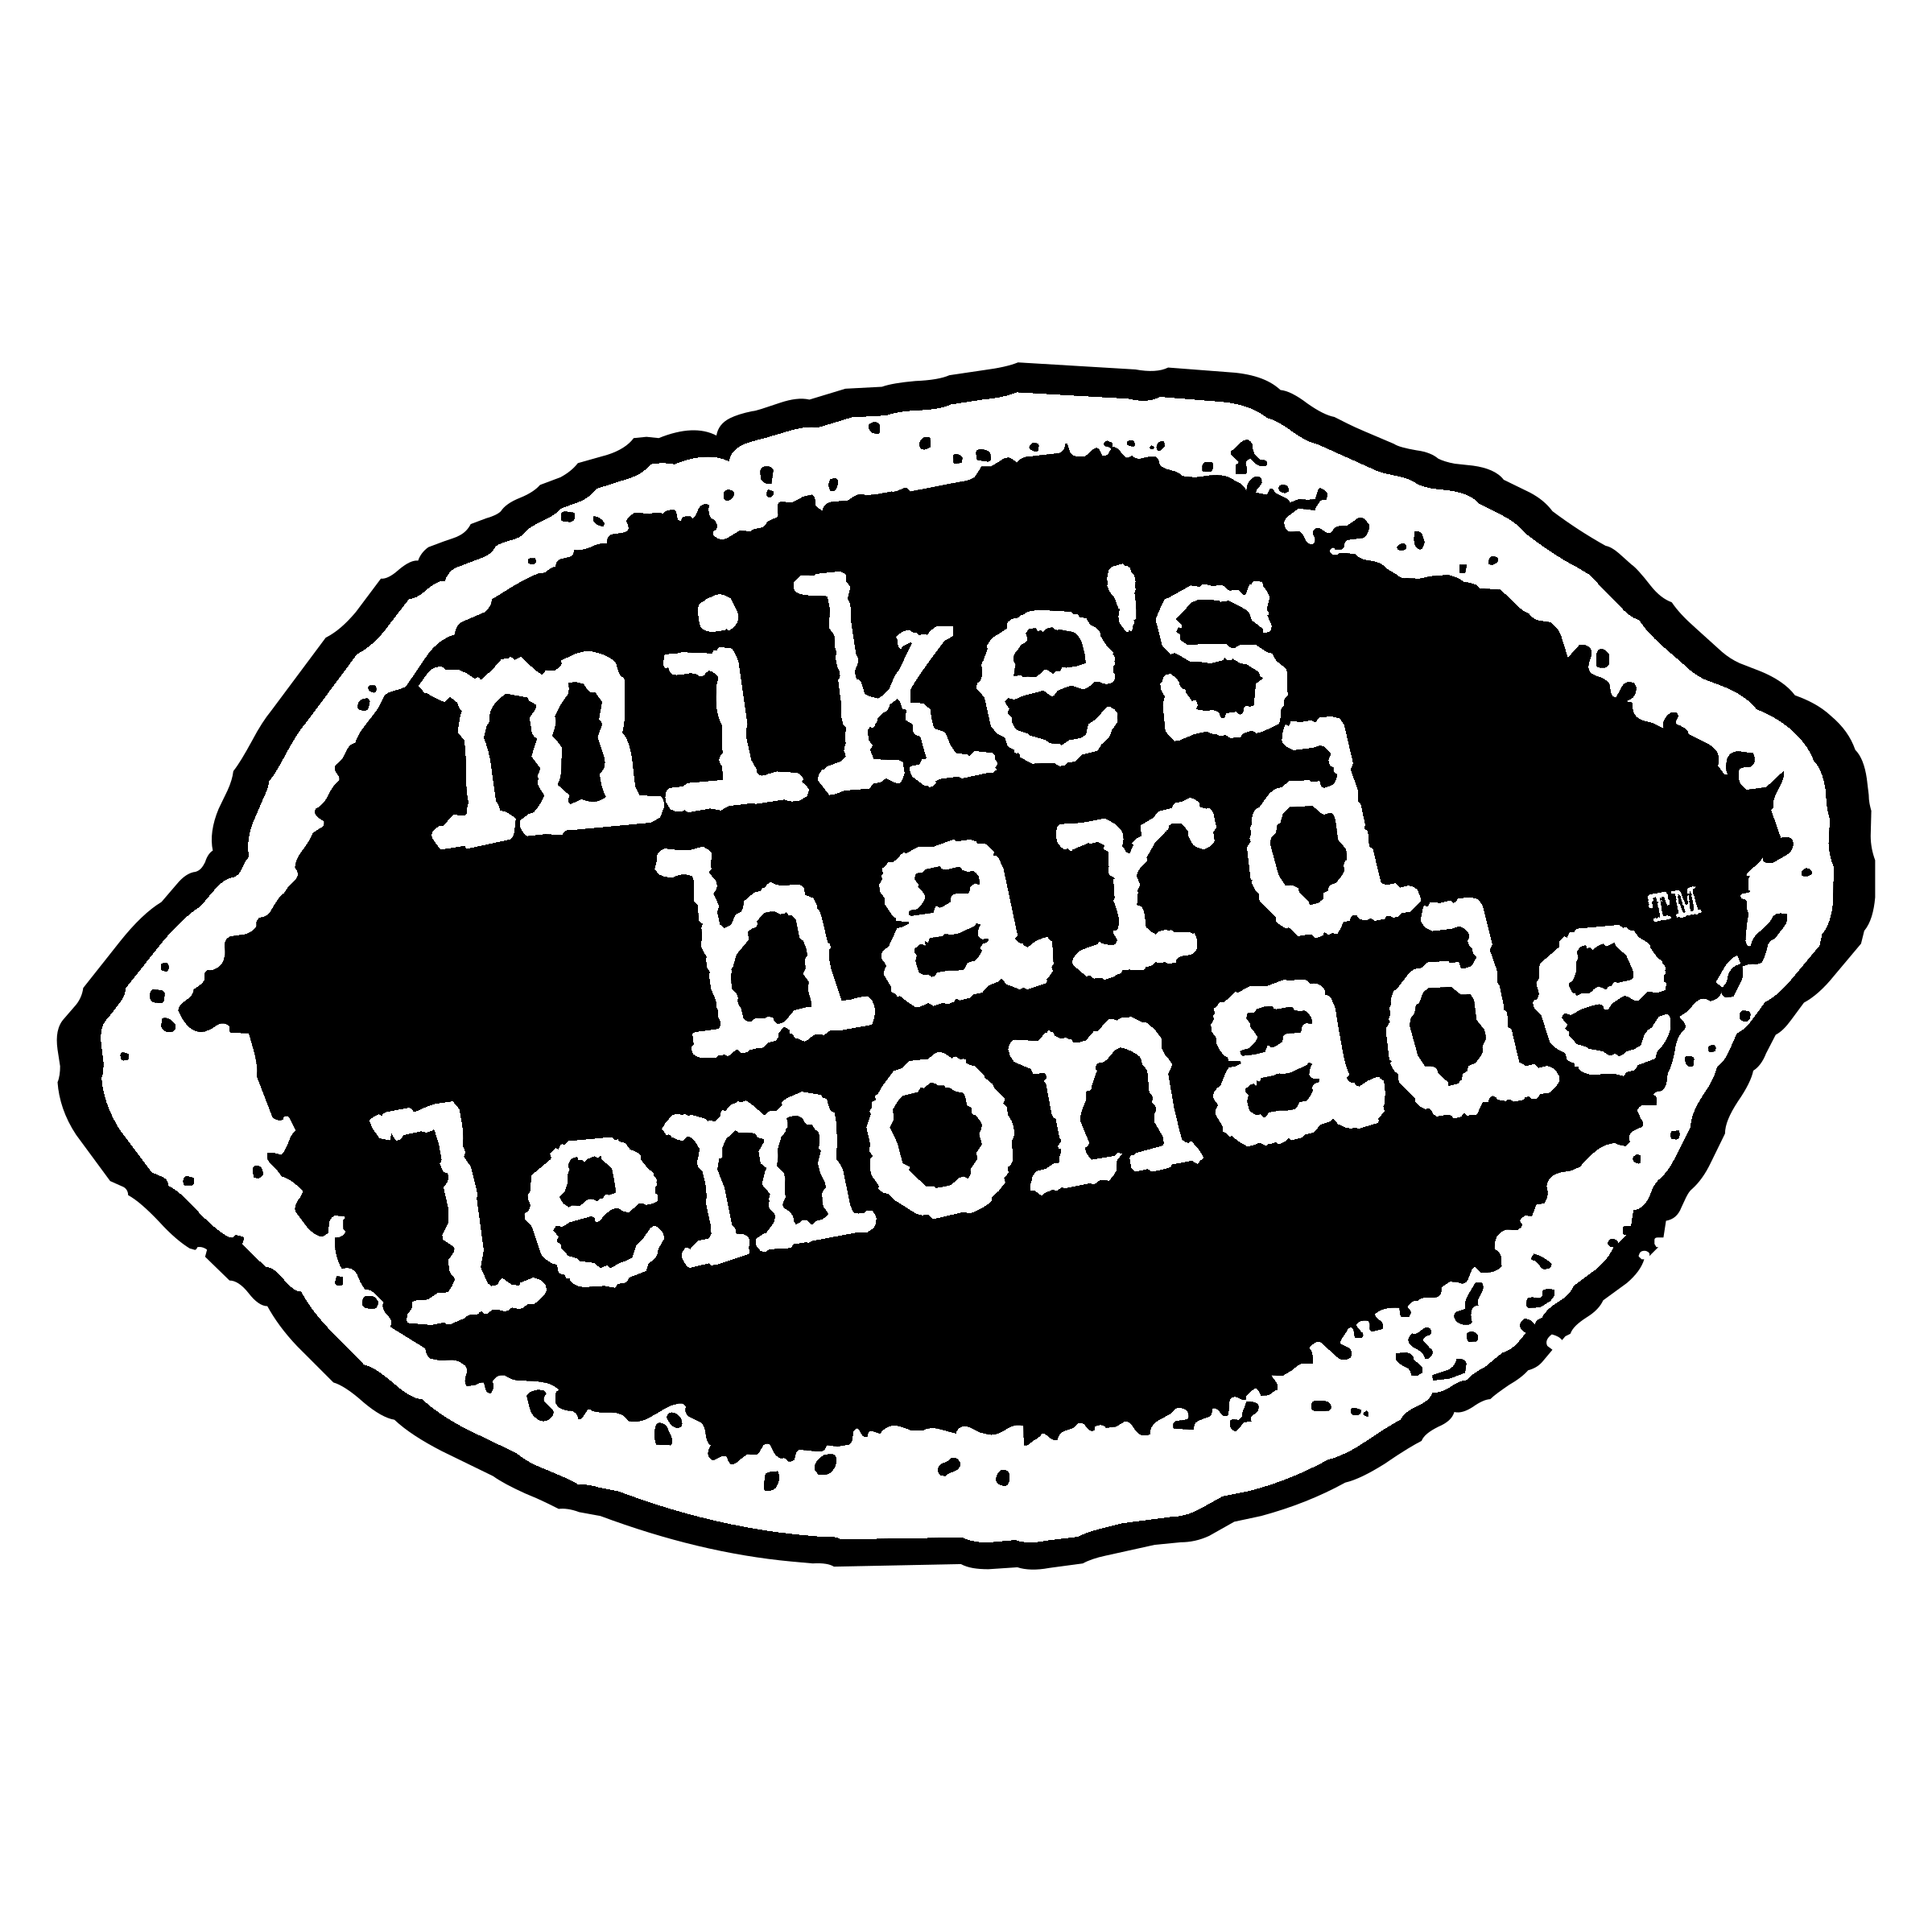 Mike's Logo - Mike's Hard Lemonade Logo PNG Transparent & SVG Vector - Freebie Supply